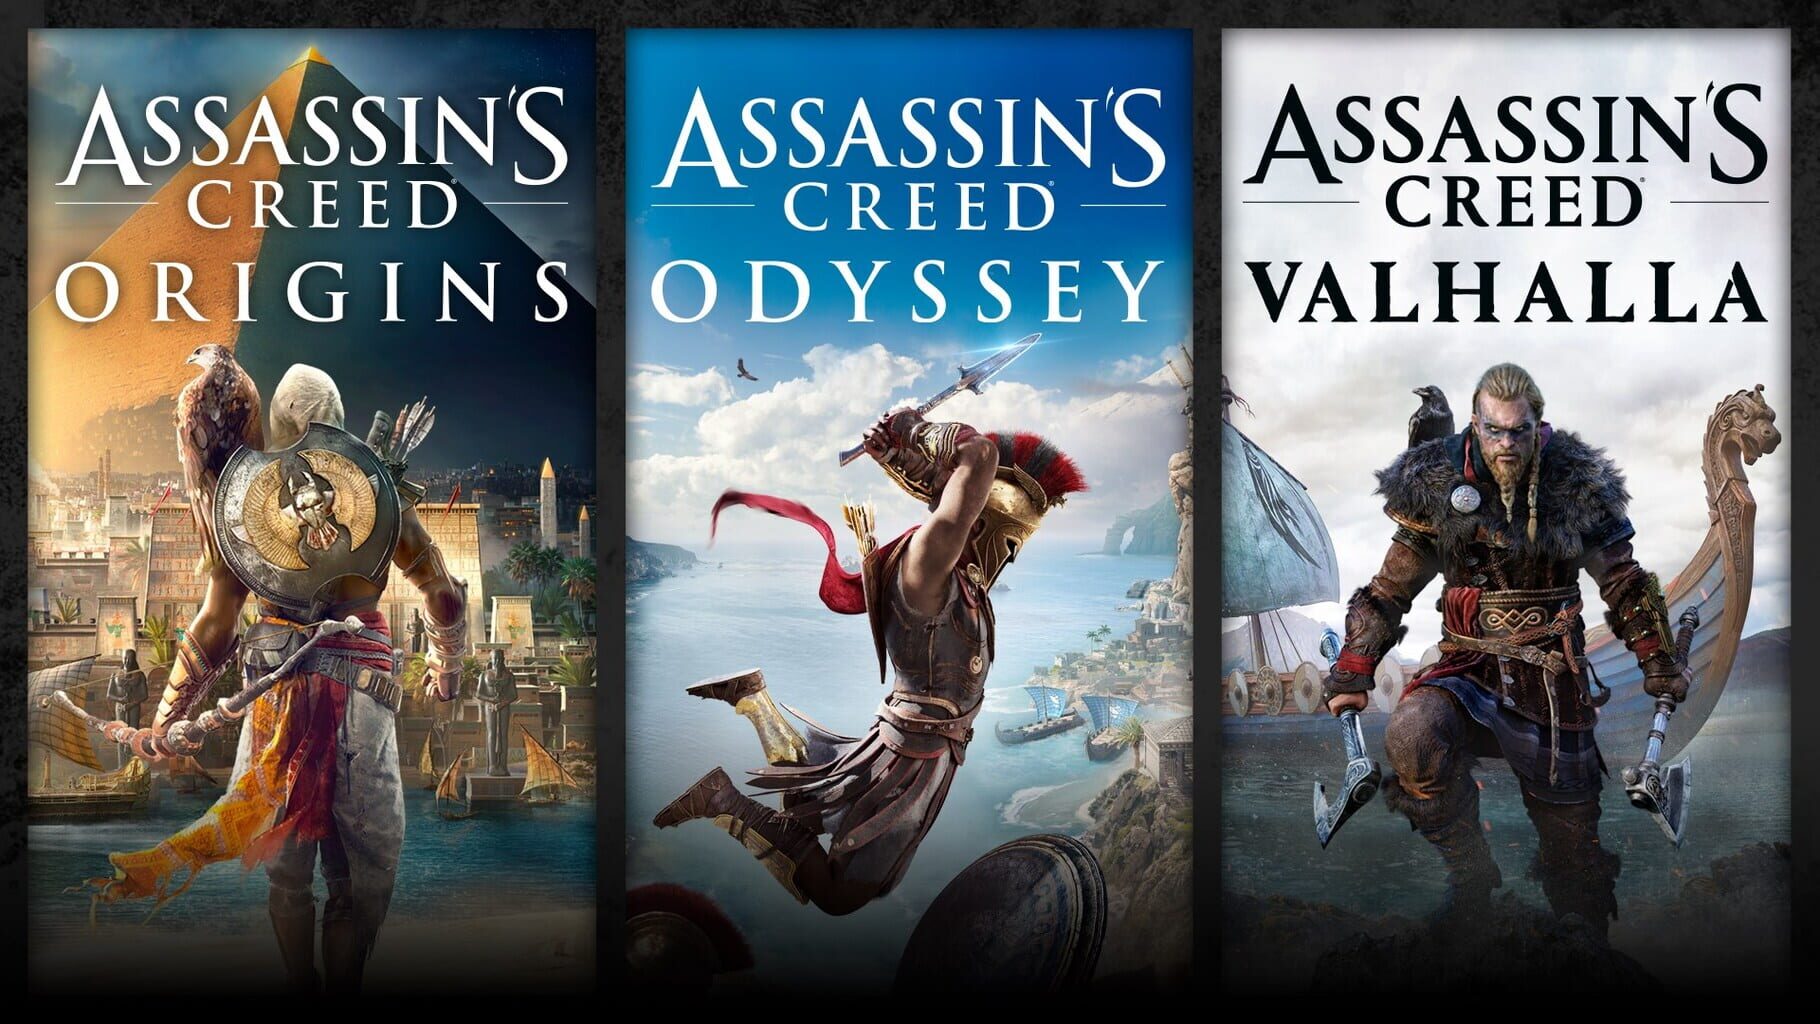 Arte - Assassin's Creed Bundle: Assassin's Creed Valhalla, Assassin's Creed Odyssey, and Assassin's Creed Origins